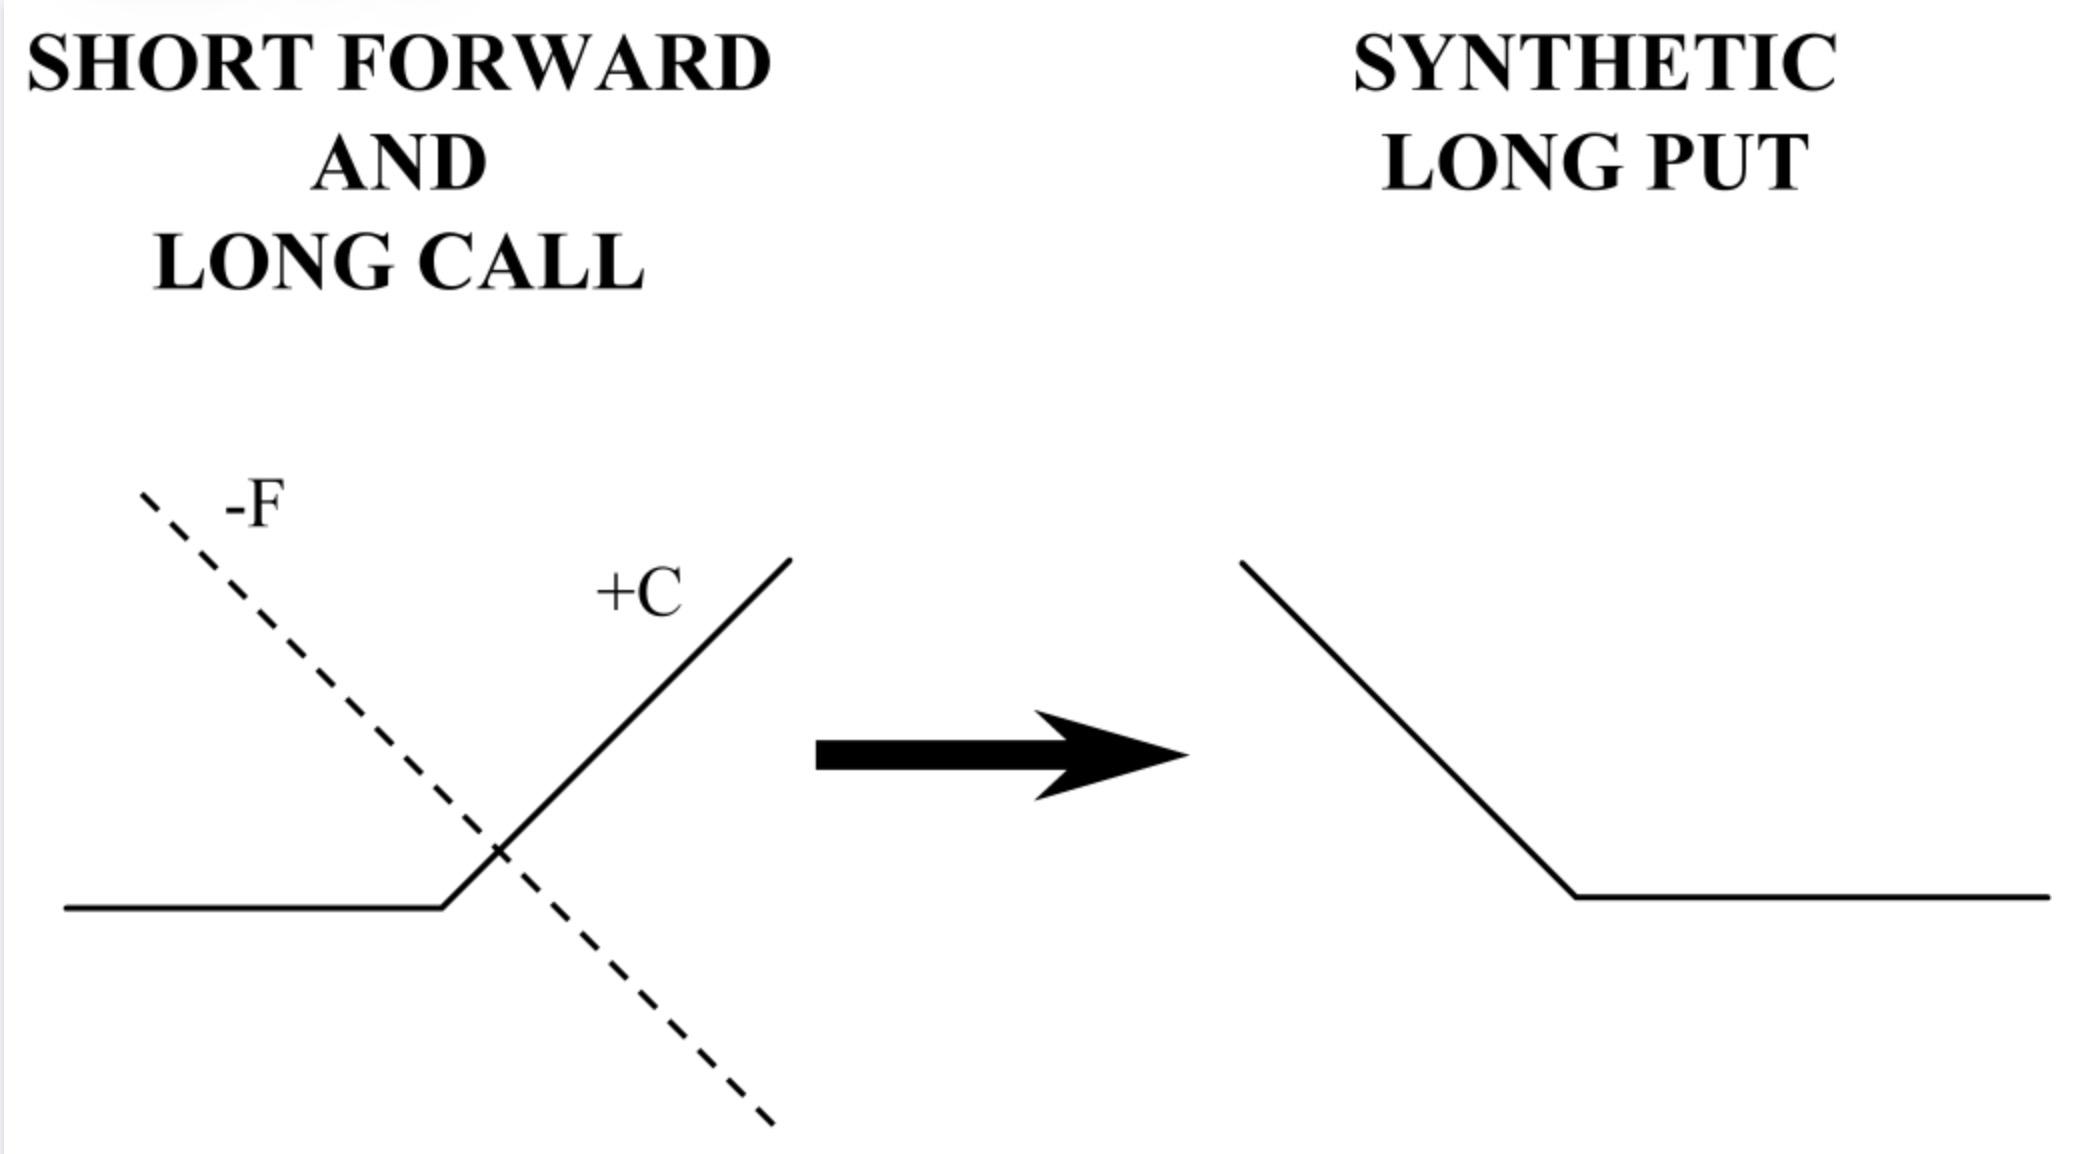 Synthetic Long Put Option Image